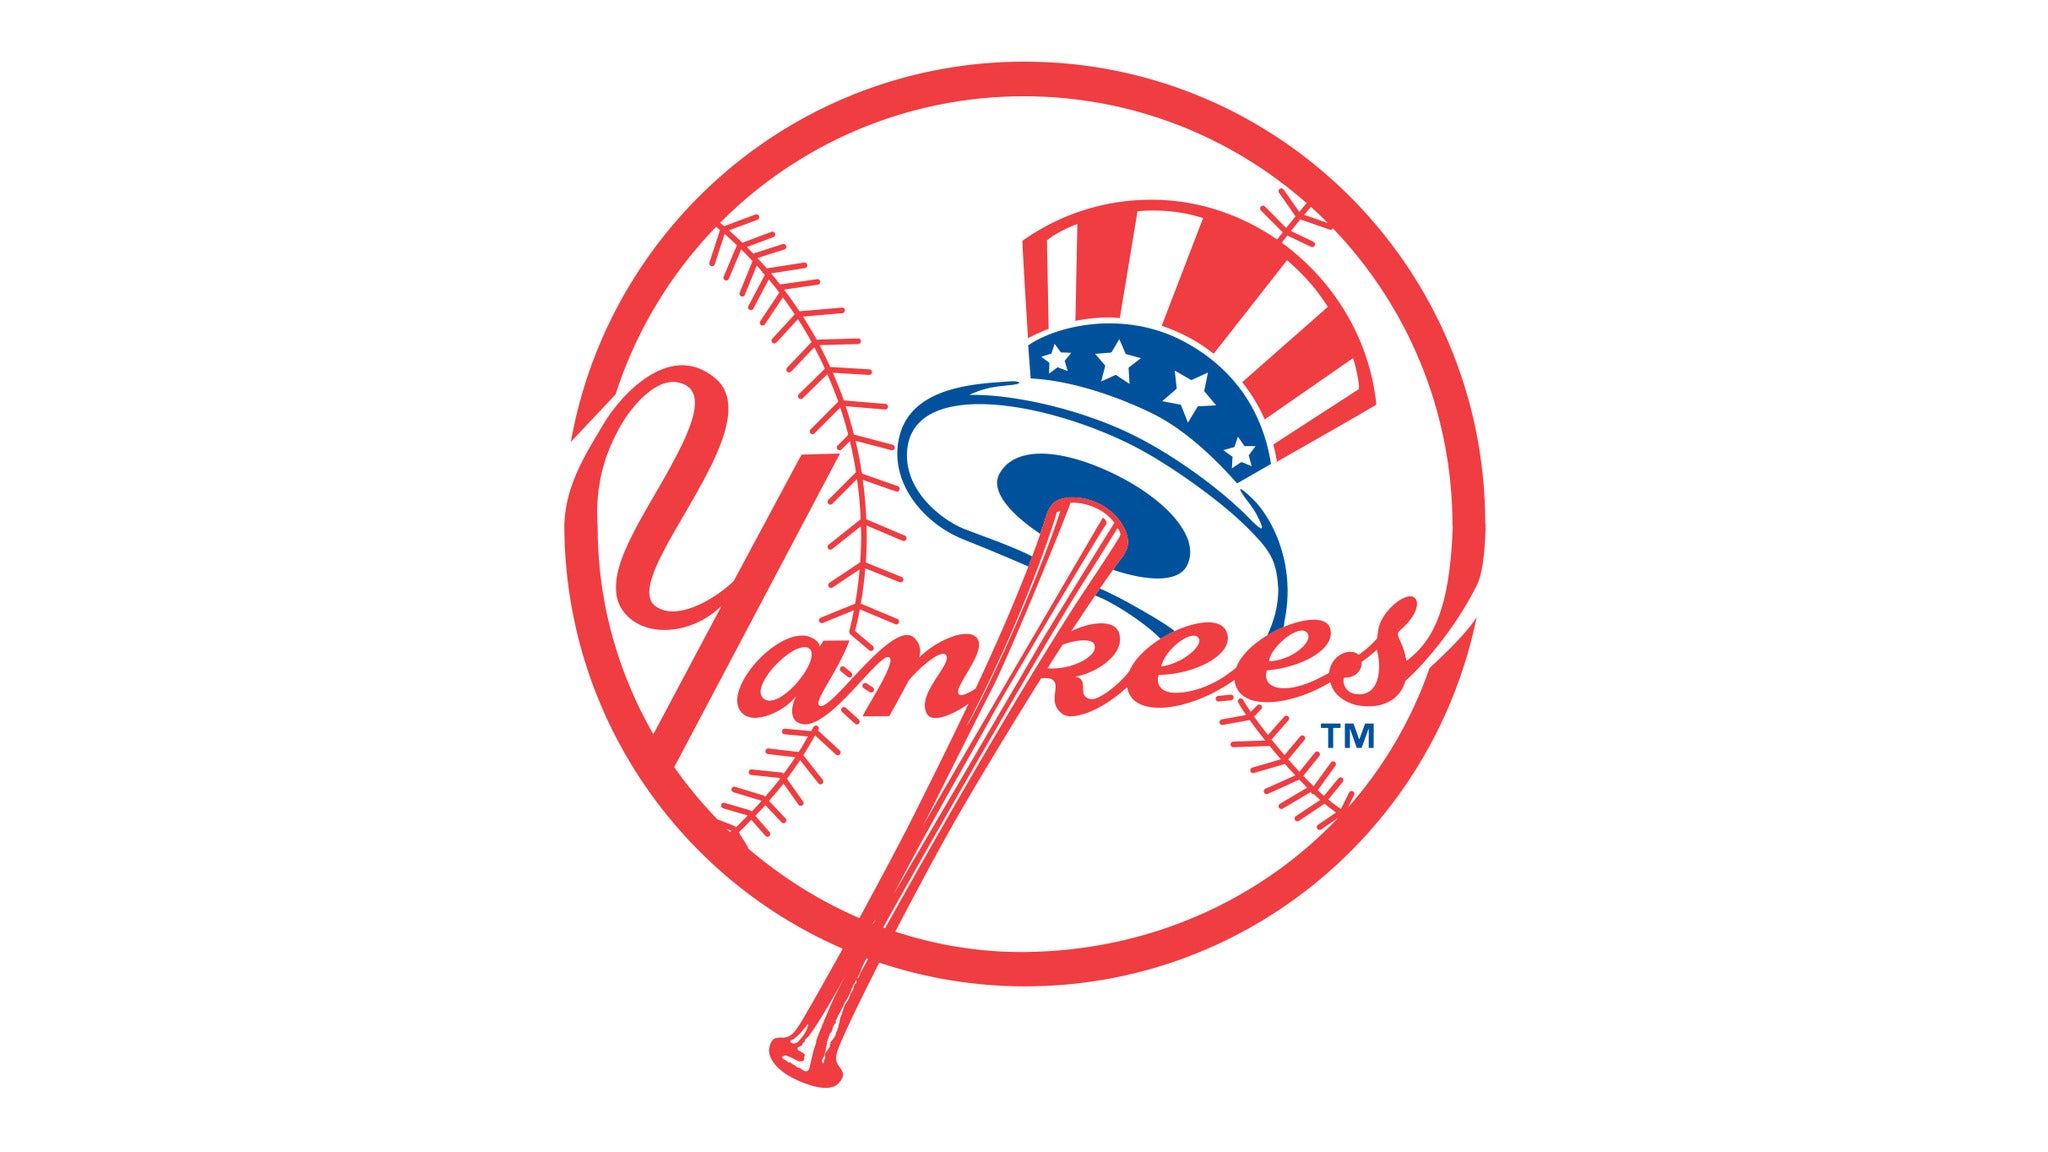 New York Yankees v. Los Angeles Angels * Premium Seating